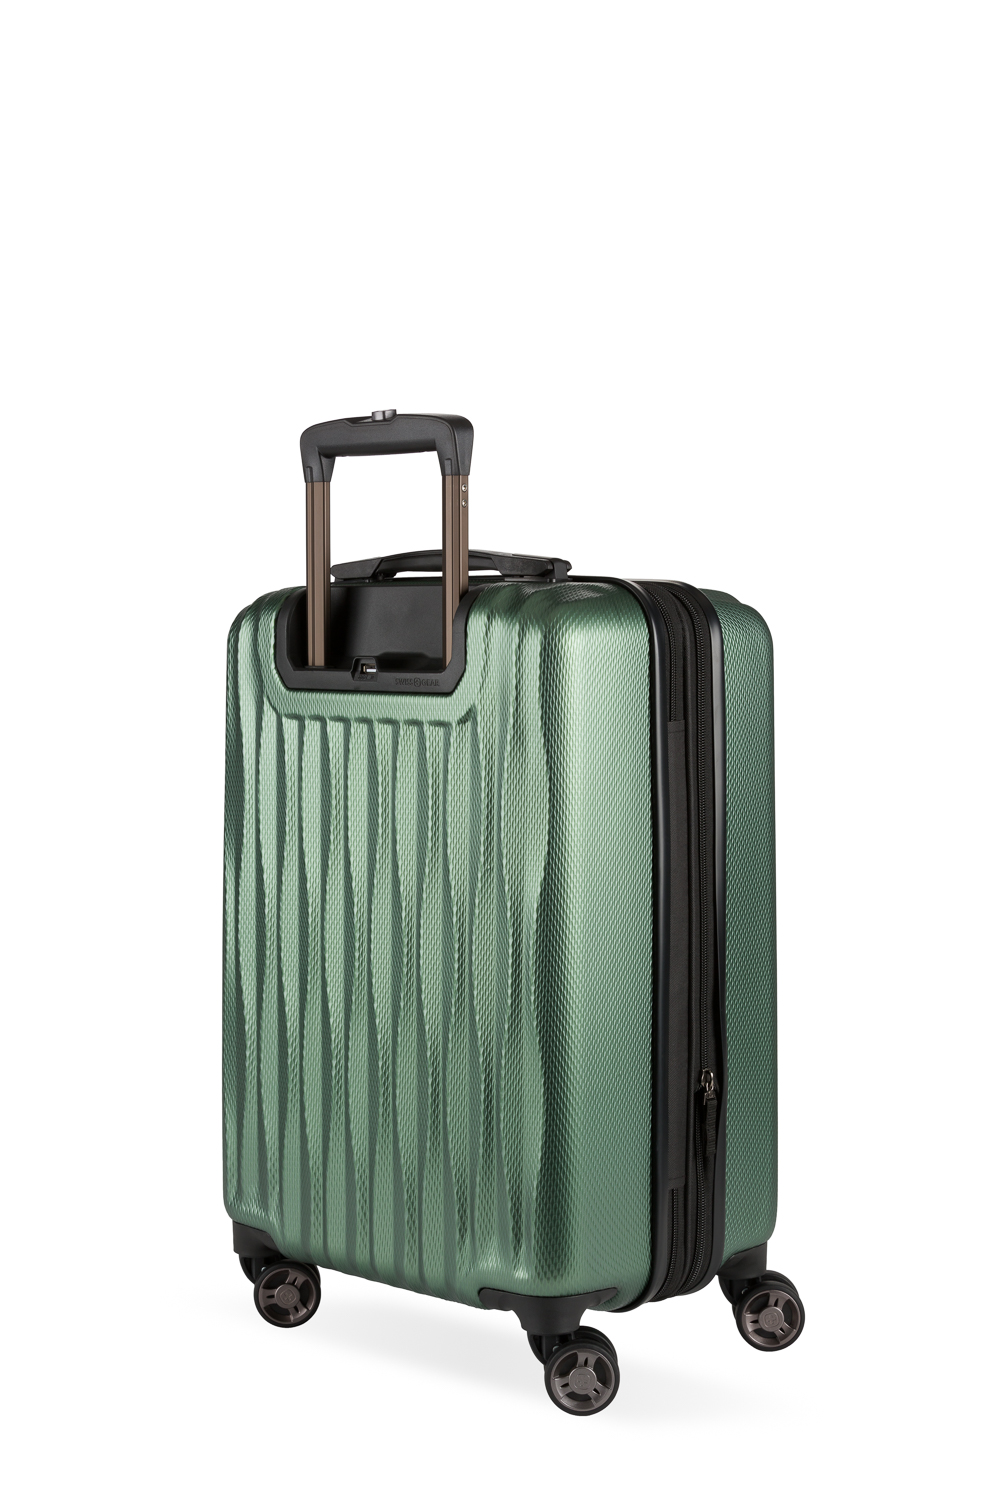 Swissgear 7272 19 USB Energie Expandable Carry On Hardside Spinner Luggage  - Verdun Green